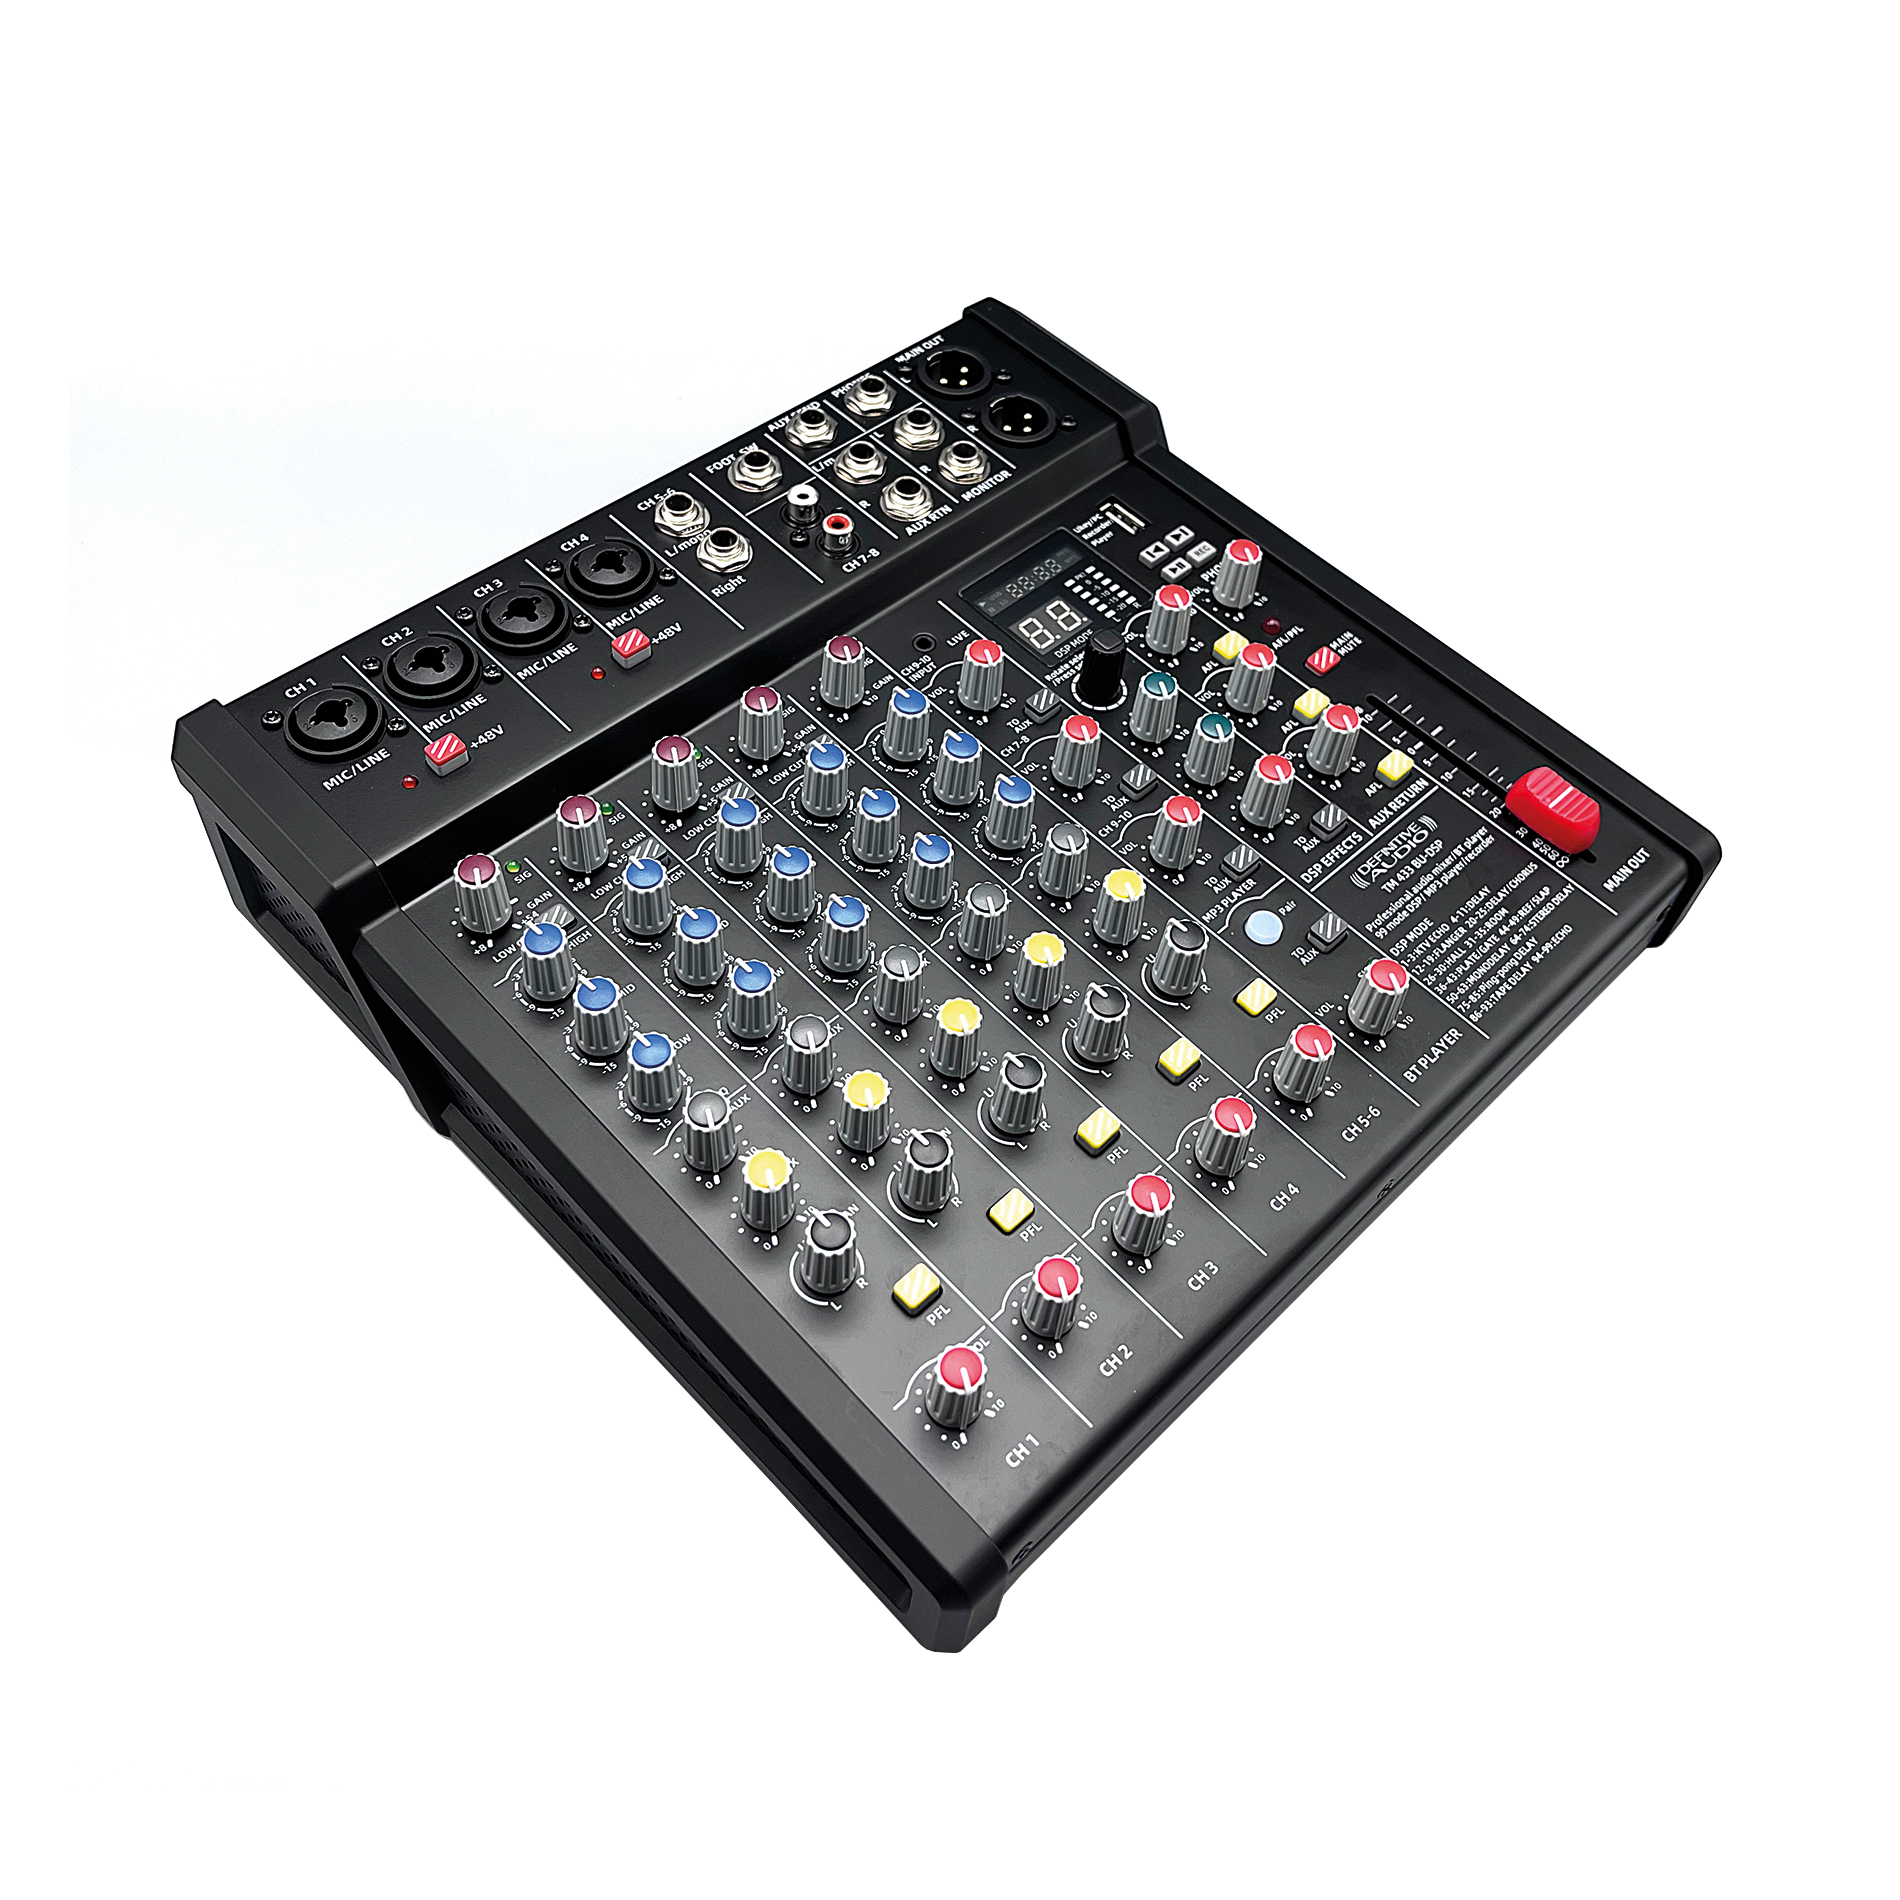 Definitive Audio Tm 433 Bu-dsp - Analog mixing desk - Variation 6